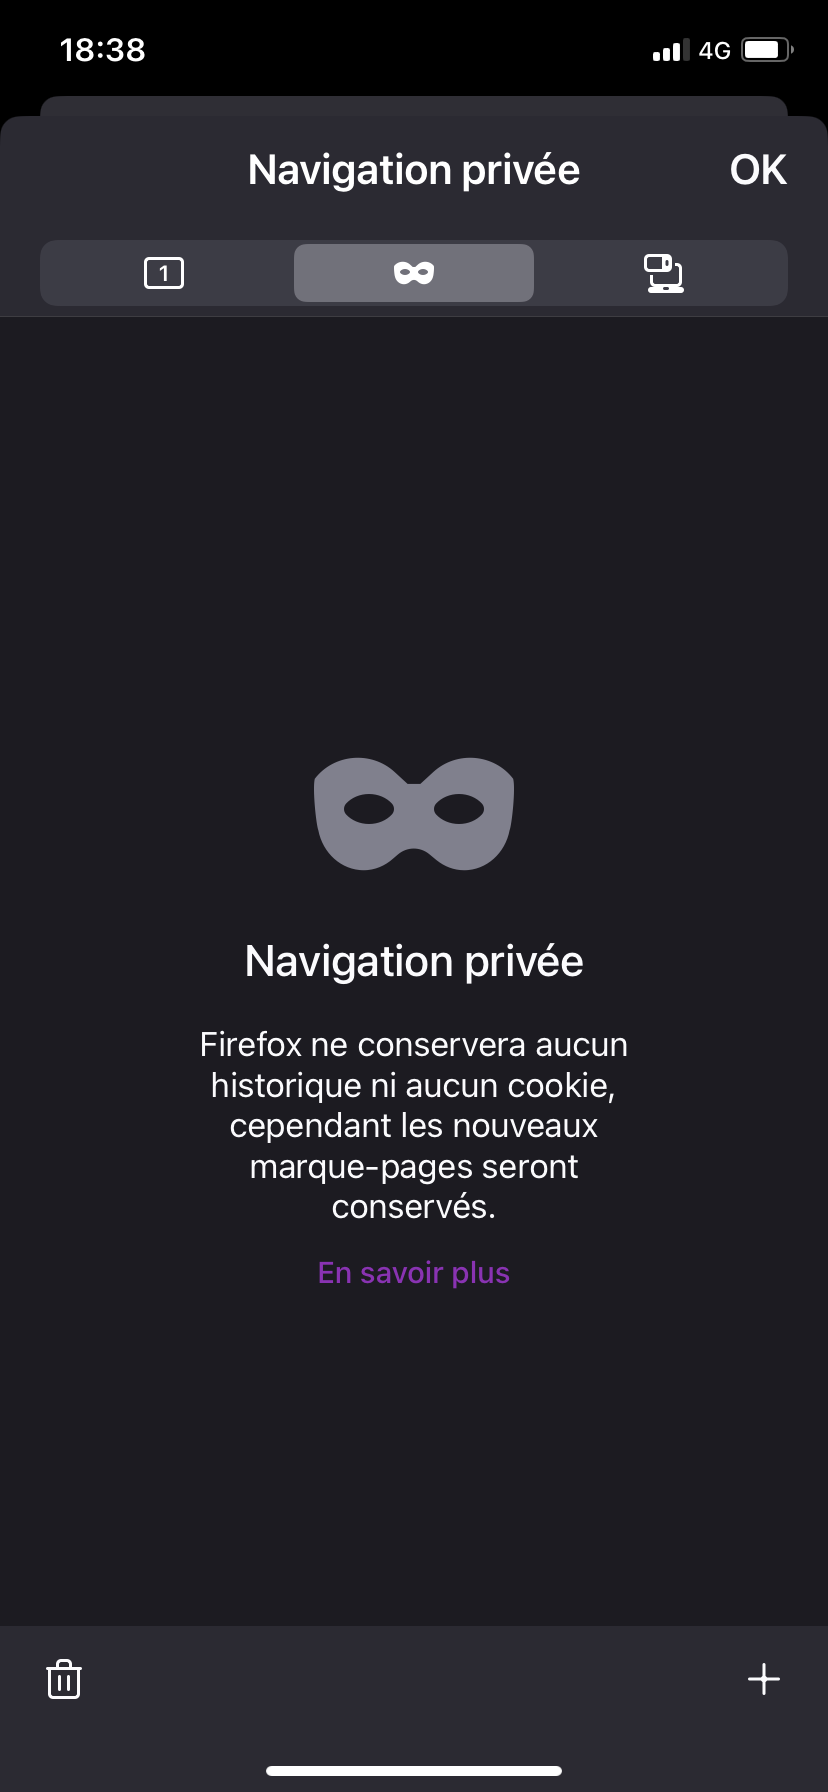 Firefox navigation privée mobile 2